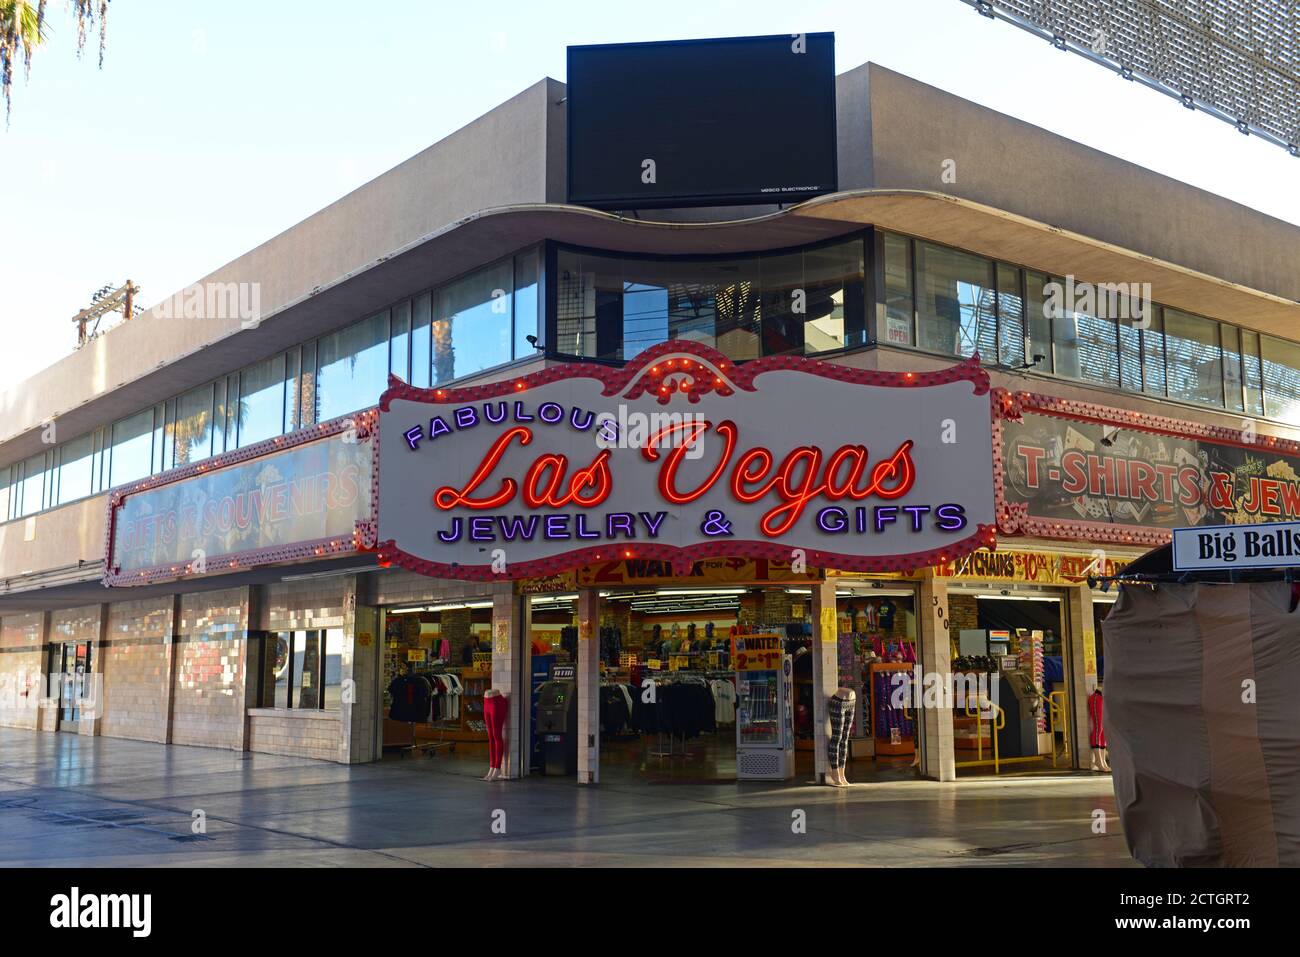 Las Vegas jewelry shop celebrates 80 years in business this week